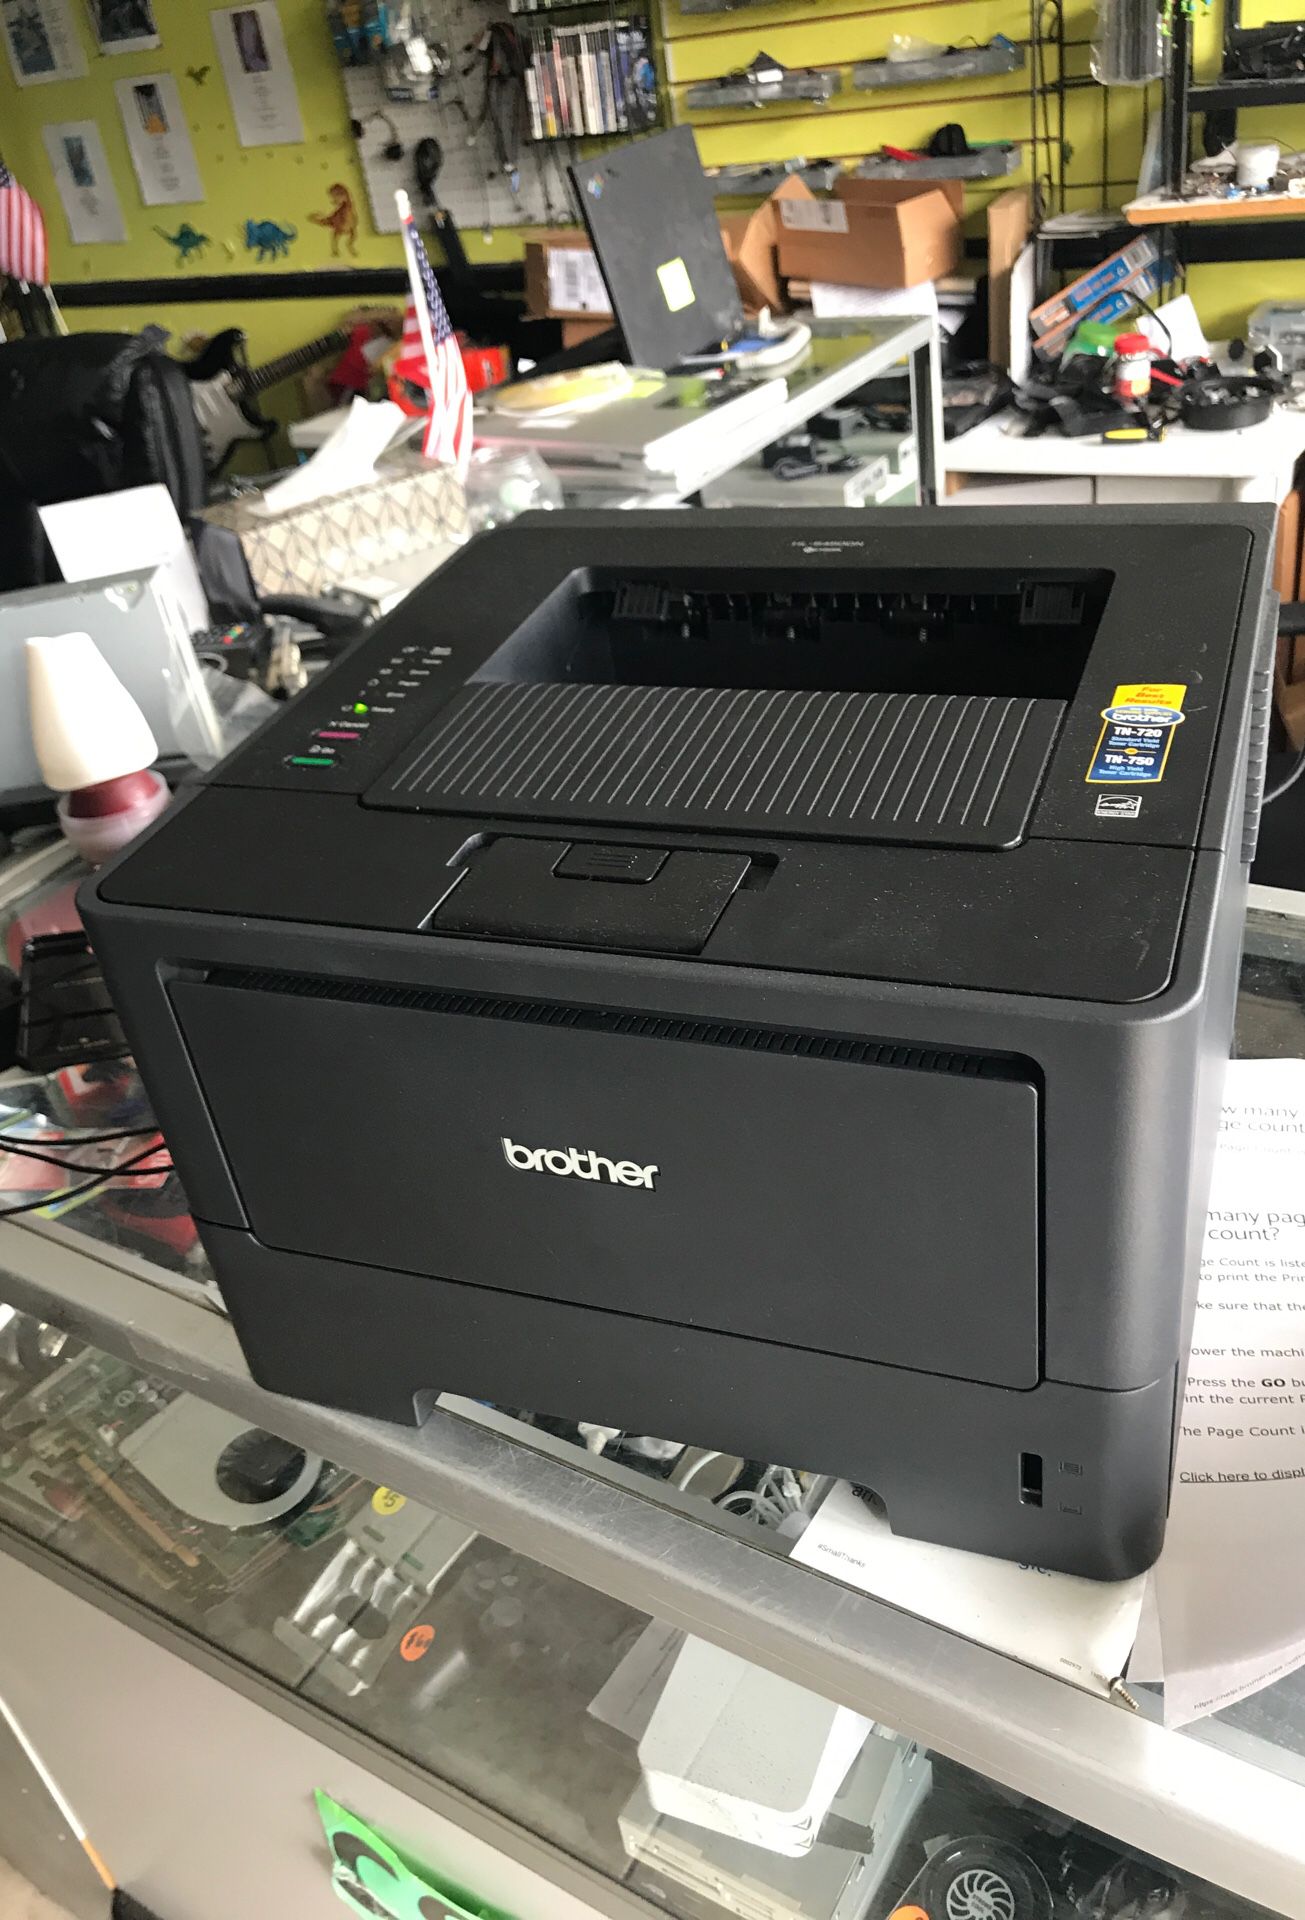 Brother hl -5450dn printer